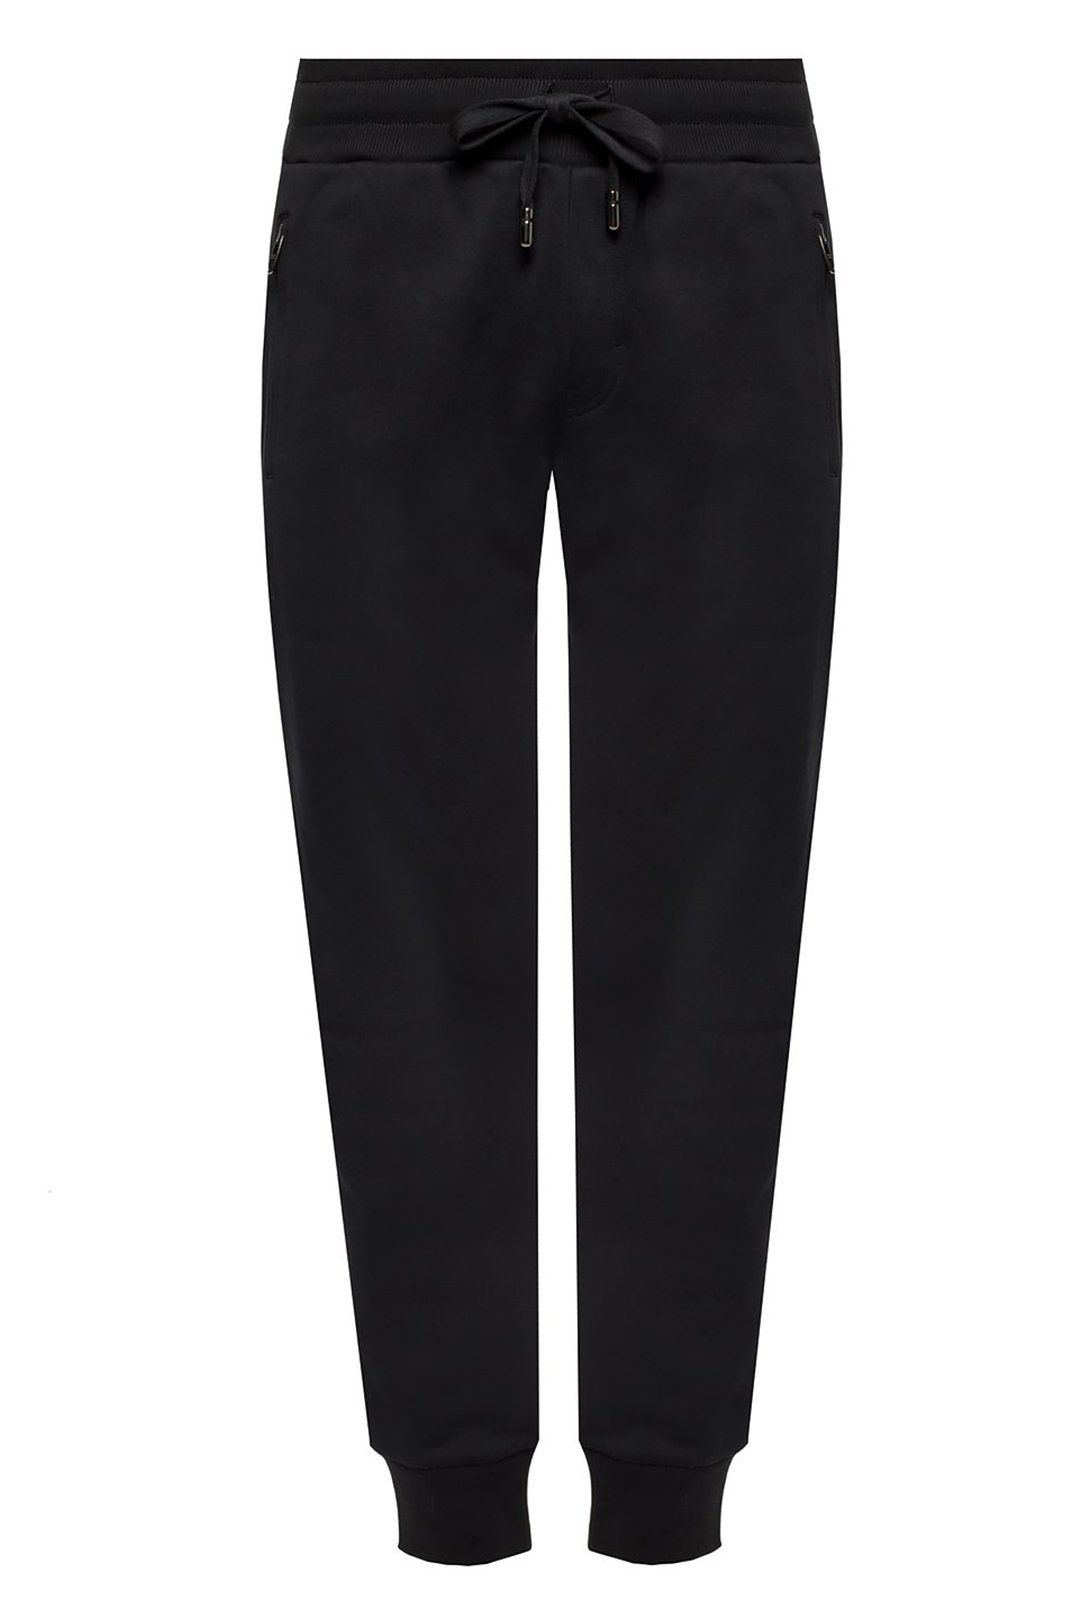 Pantalons sport/streetwear  Dolce&Gabbana GYUSEZ G7TWG N0000 BLACK